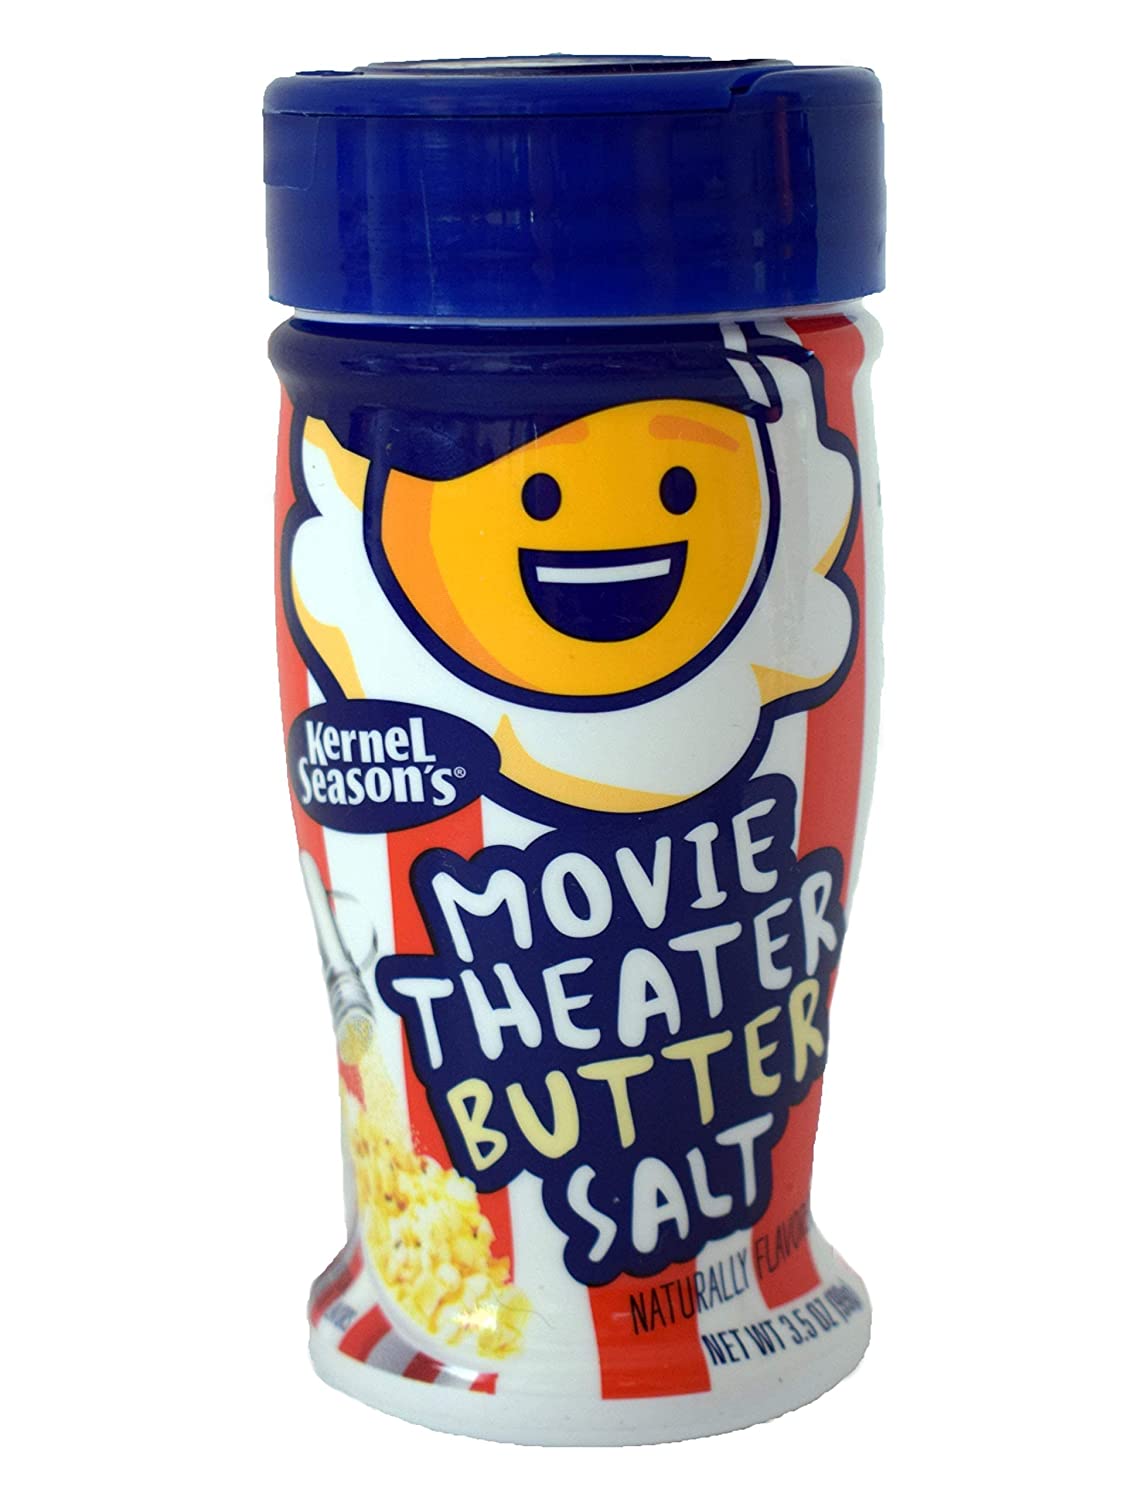 Kernel Season's Popcorn Seasoning Jumbo Movie Theater Butter Variety Pack, Salt, 2 Count